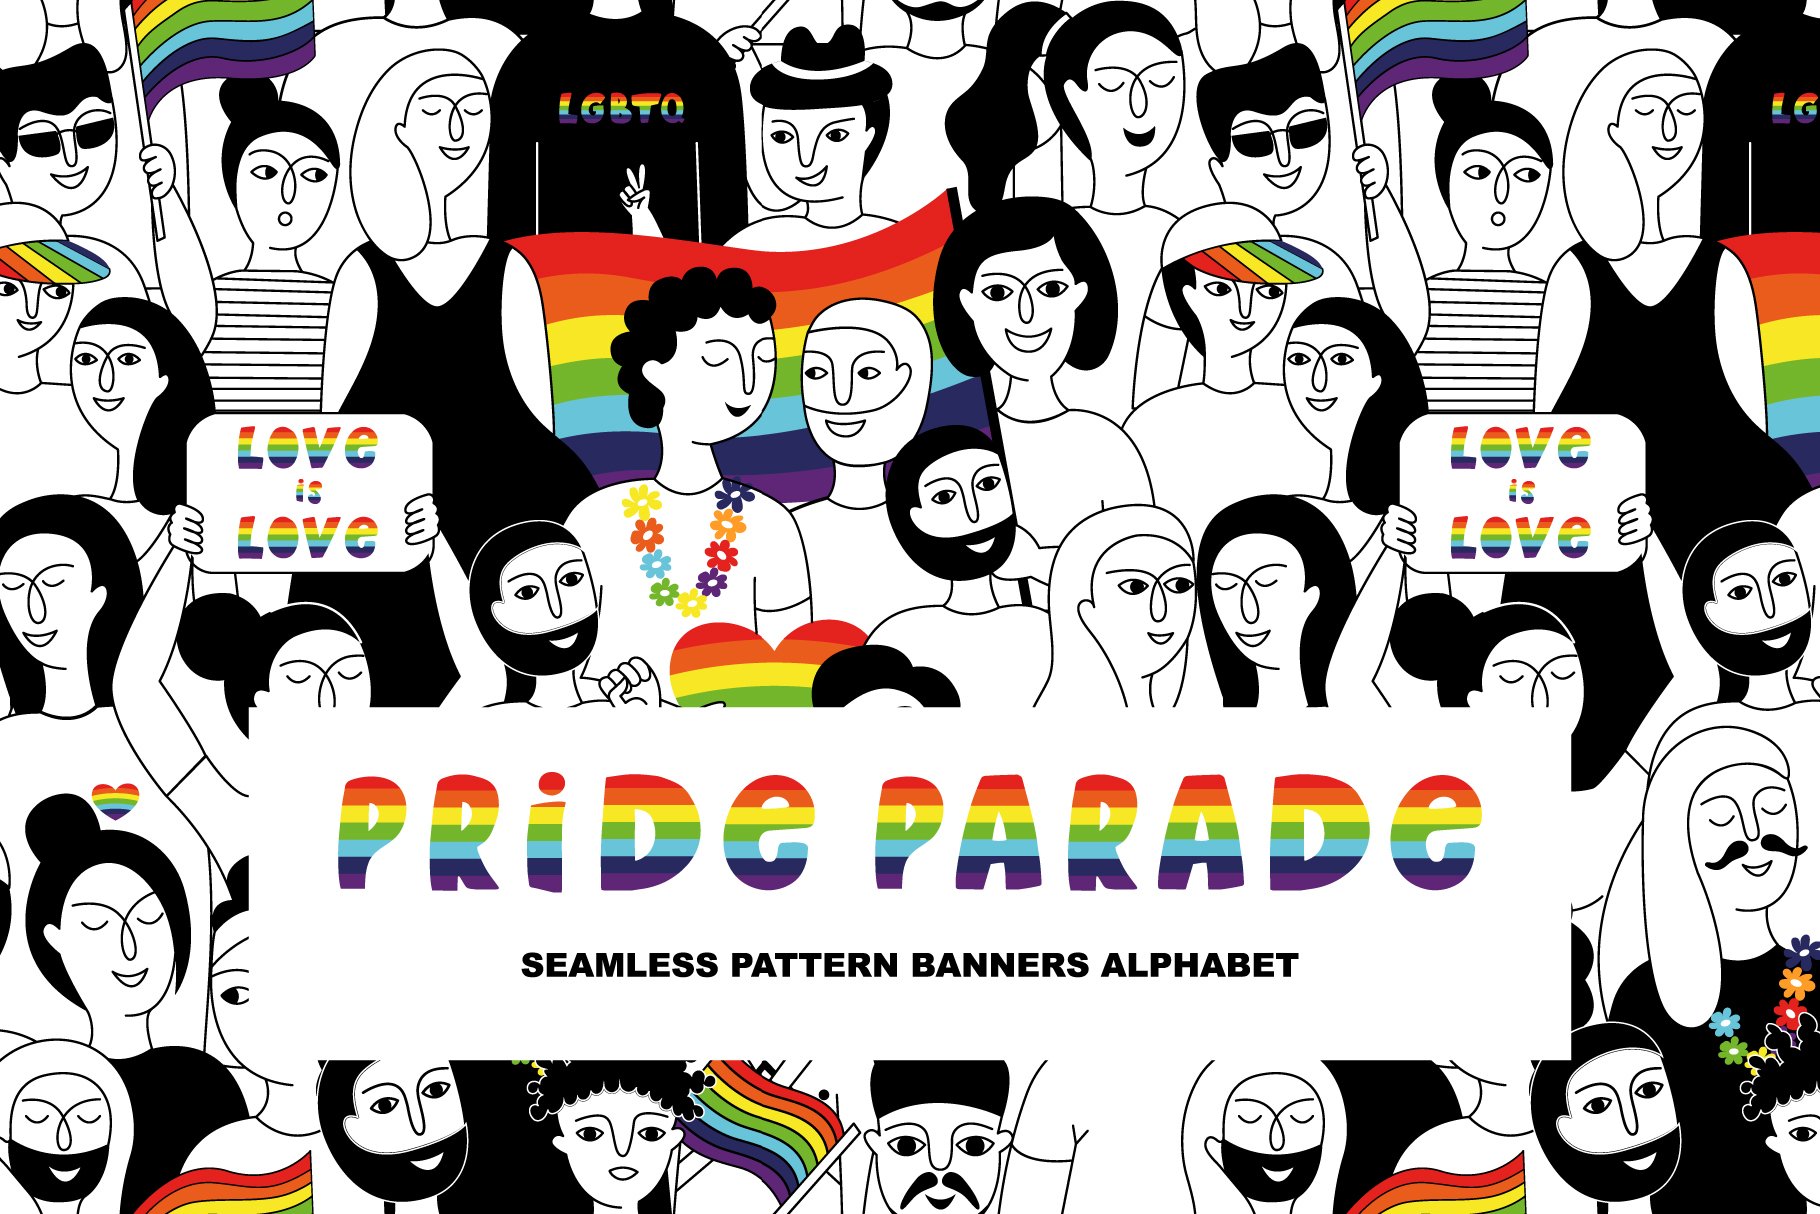 PRIDE PARADE/LGBTQ cover image.